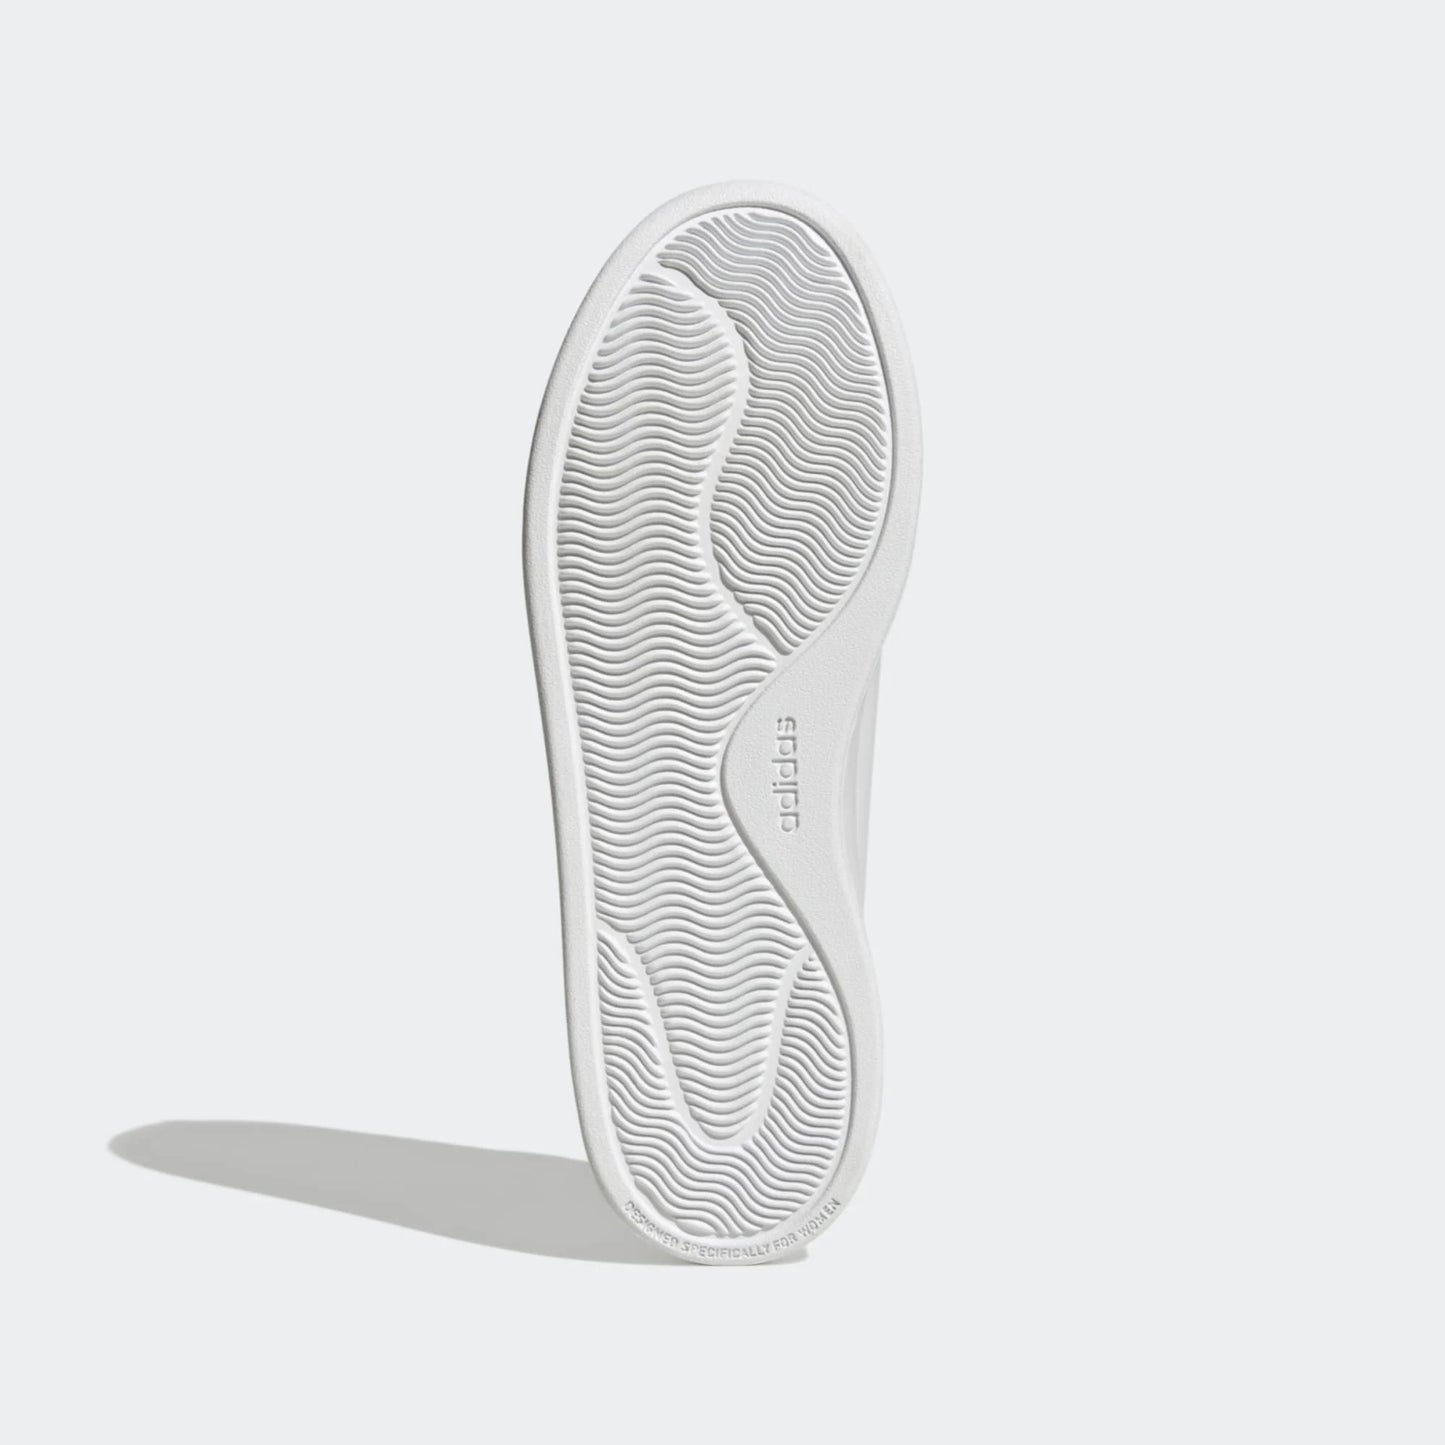 - Adidas Womans White Court Silk Shoes - (GY9255) - CRT - R2L13 - L/P